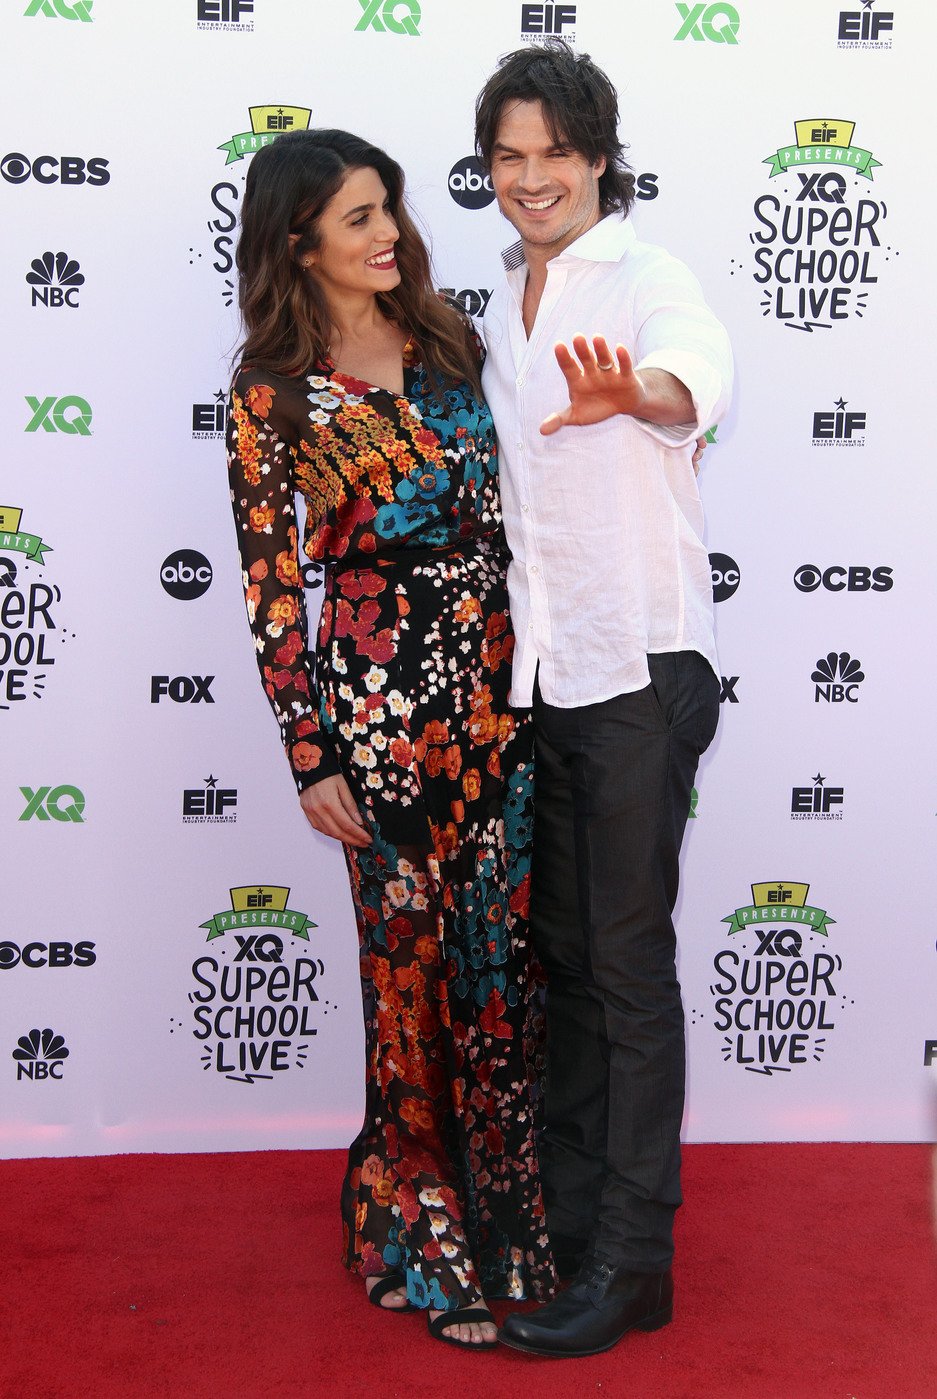 Nikki Reed and Ian Somerhalder attend Super School Live in Los Angeles on Sept. 8, 2017